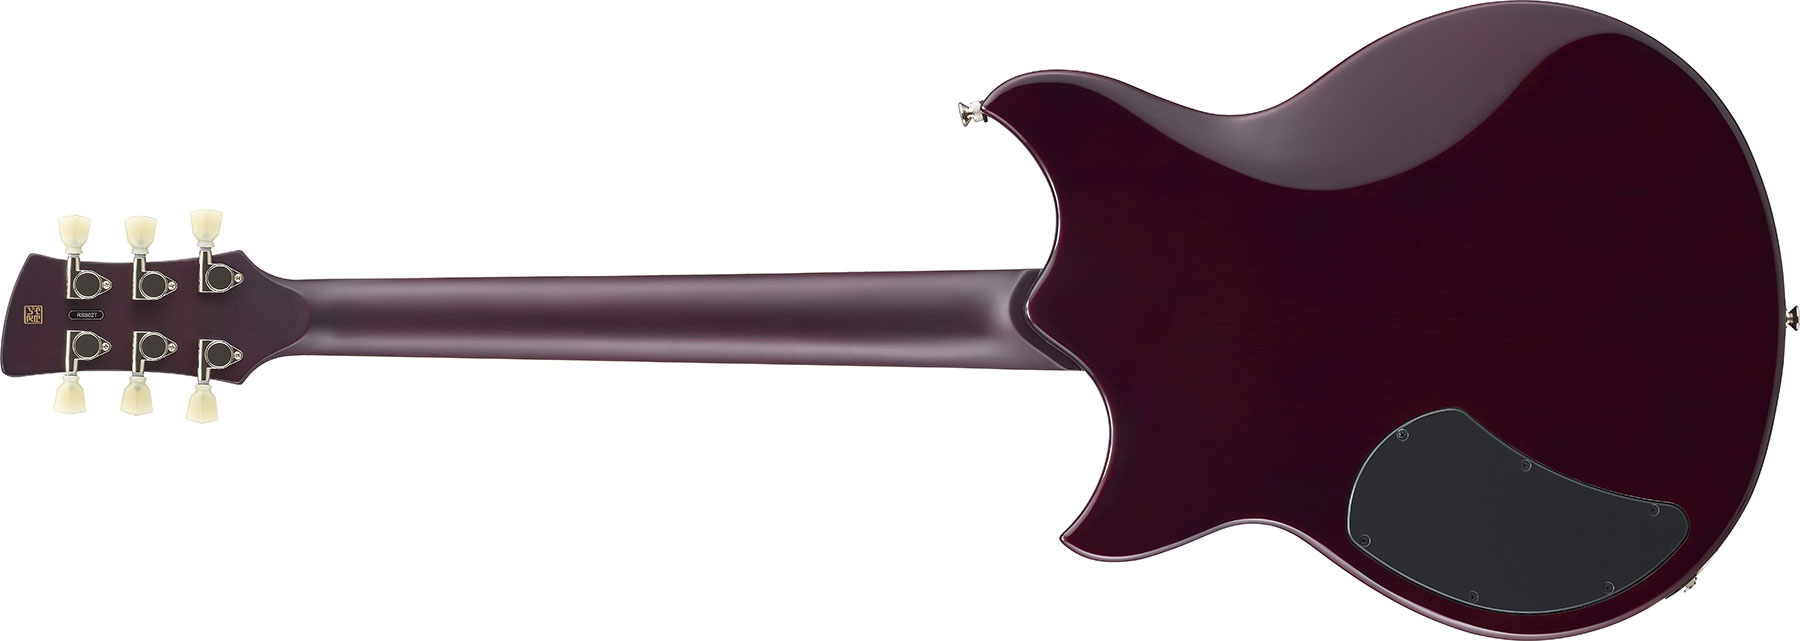 Yamaha Rss02t Revstar Standard 2p90 Ht Rw - Hot Merlot - Guitarra eléctrica de doble corte - Variation 2